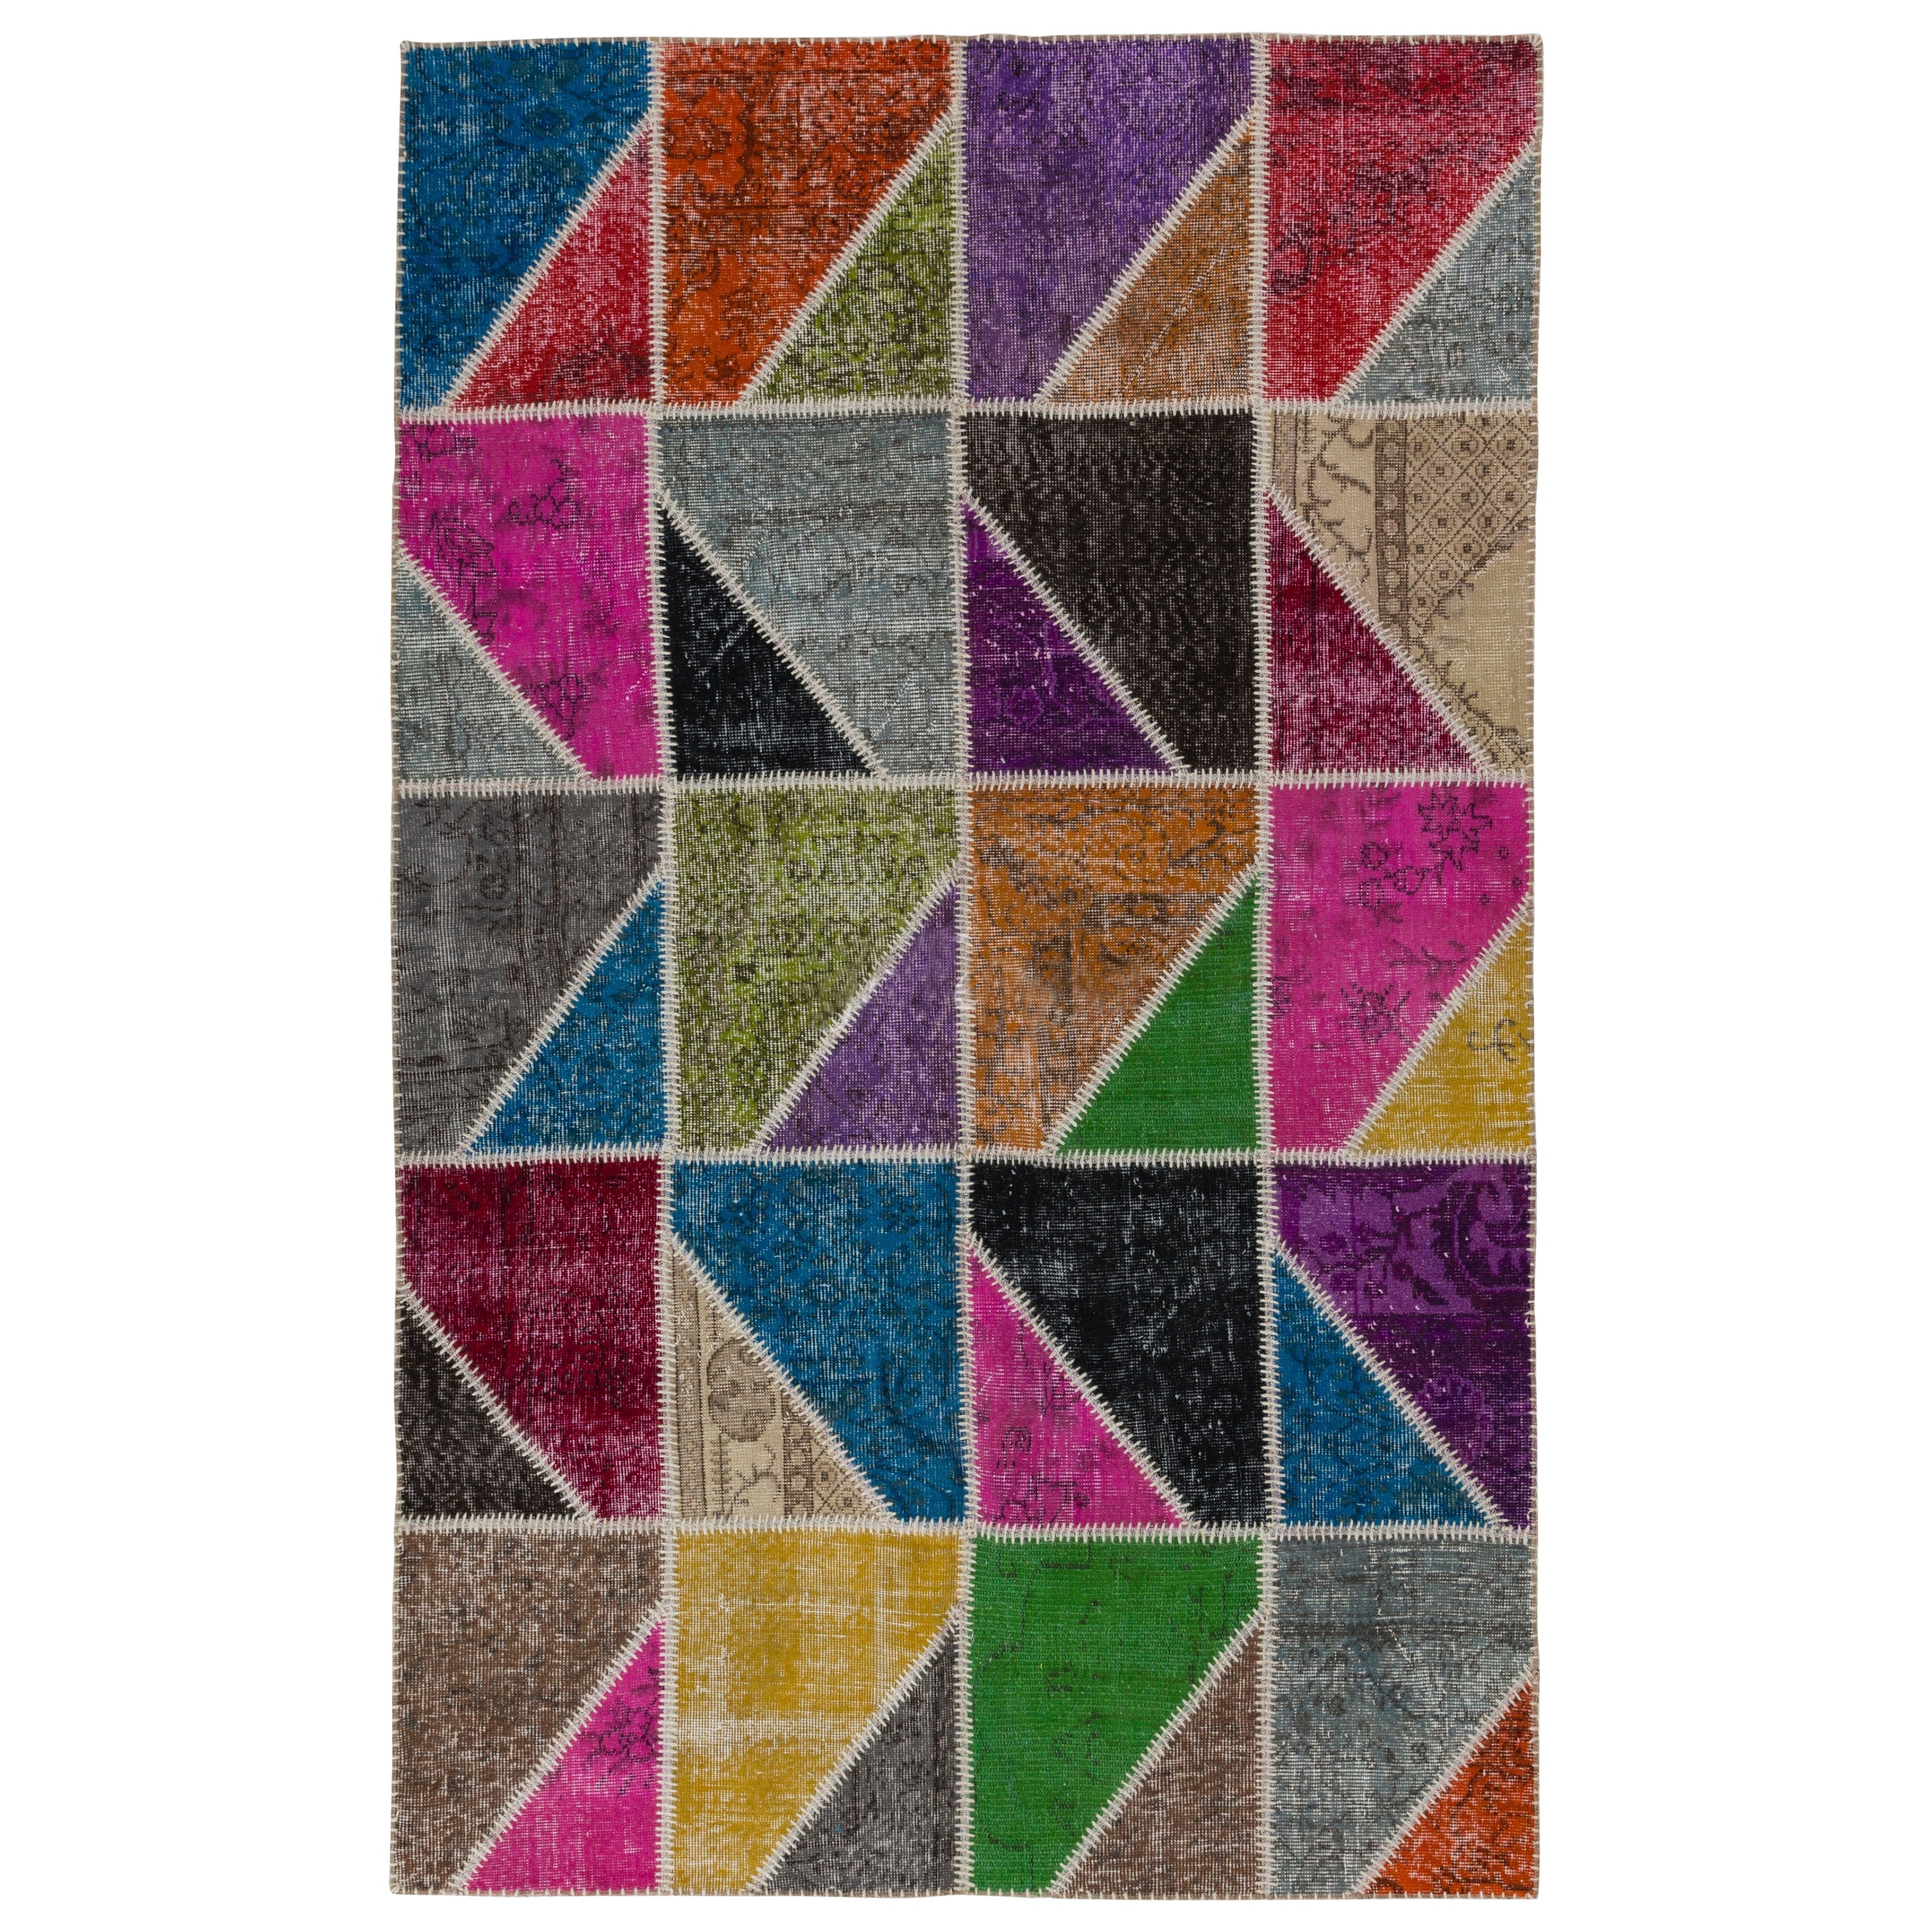 Colorful Geometric Patchwork Rug. Handmade Wool Carpet. Custom Options Available